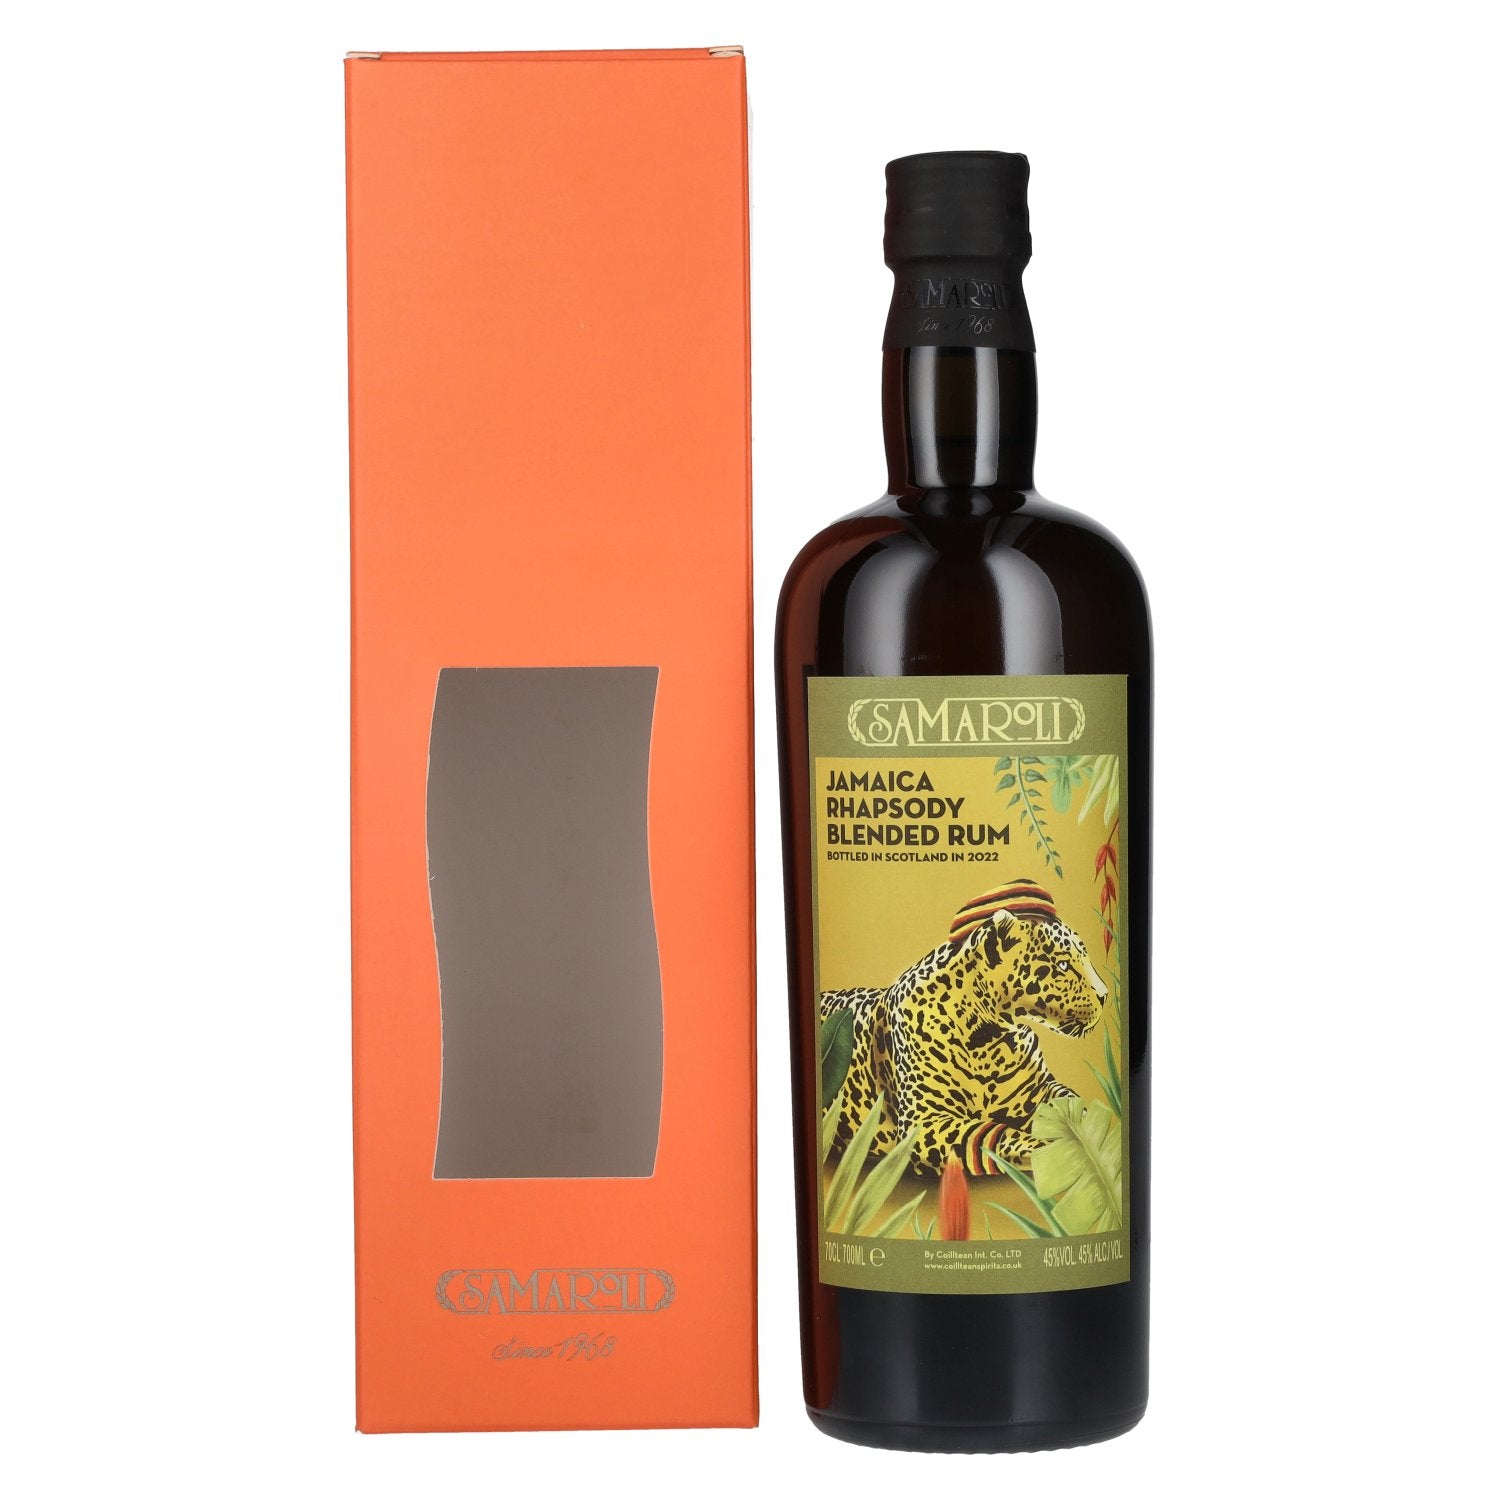 Samaroli Jamaica Rhapsody Blended Rum 2022 45% Vol. 0,7l in Giftbox